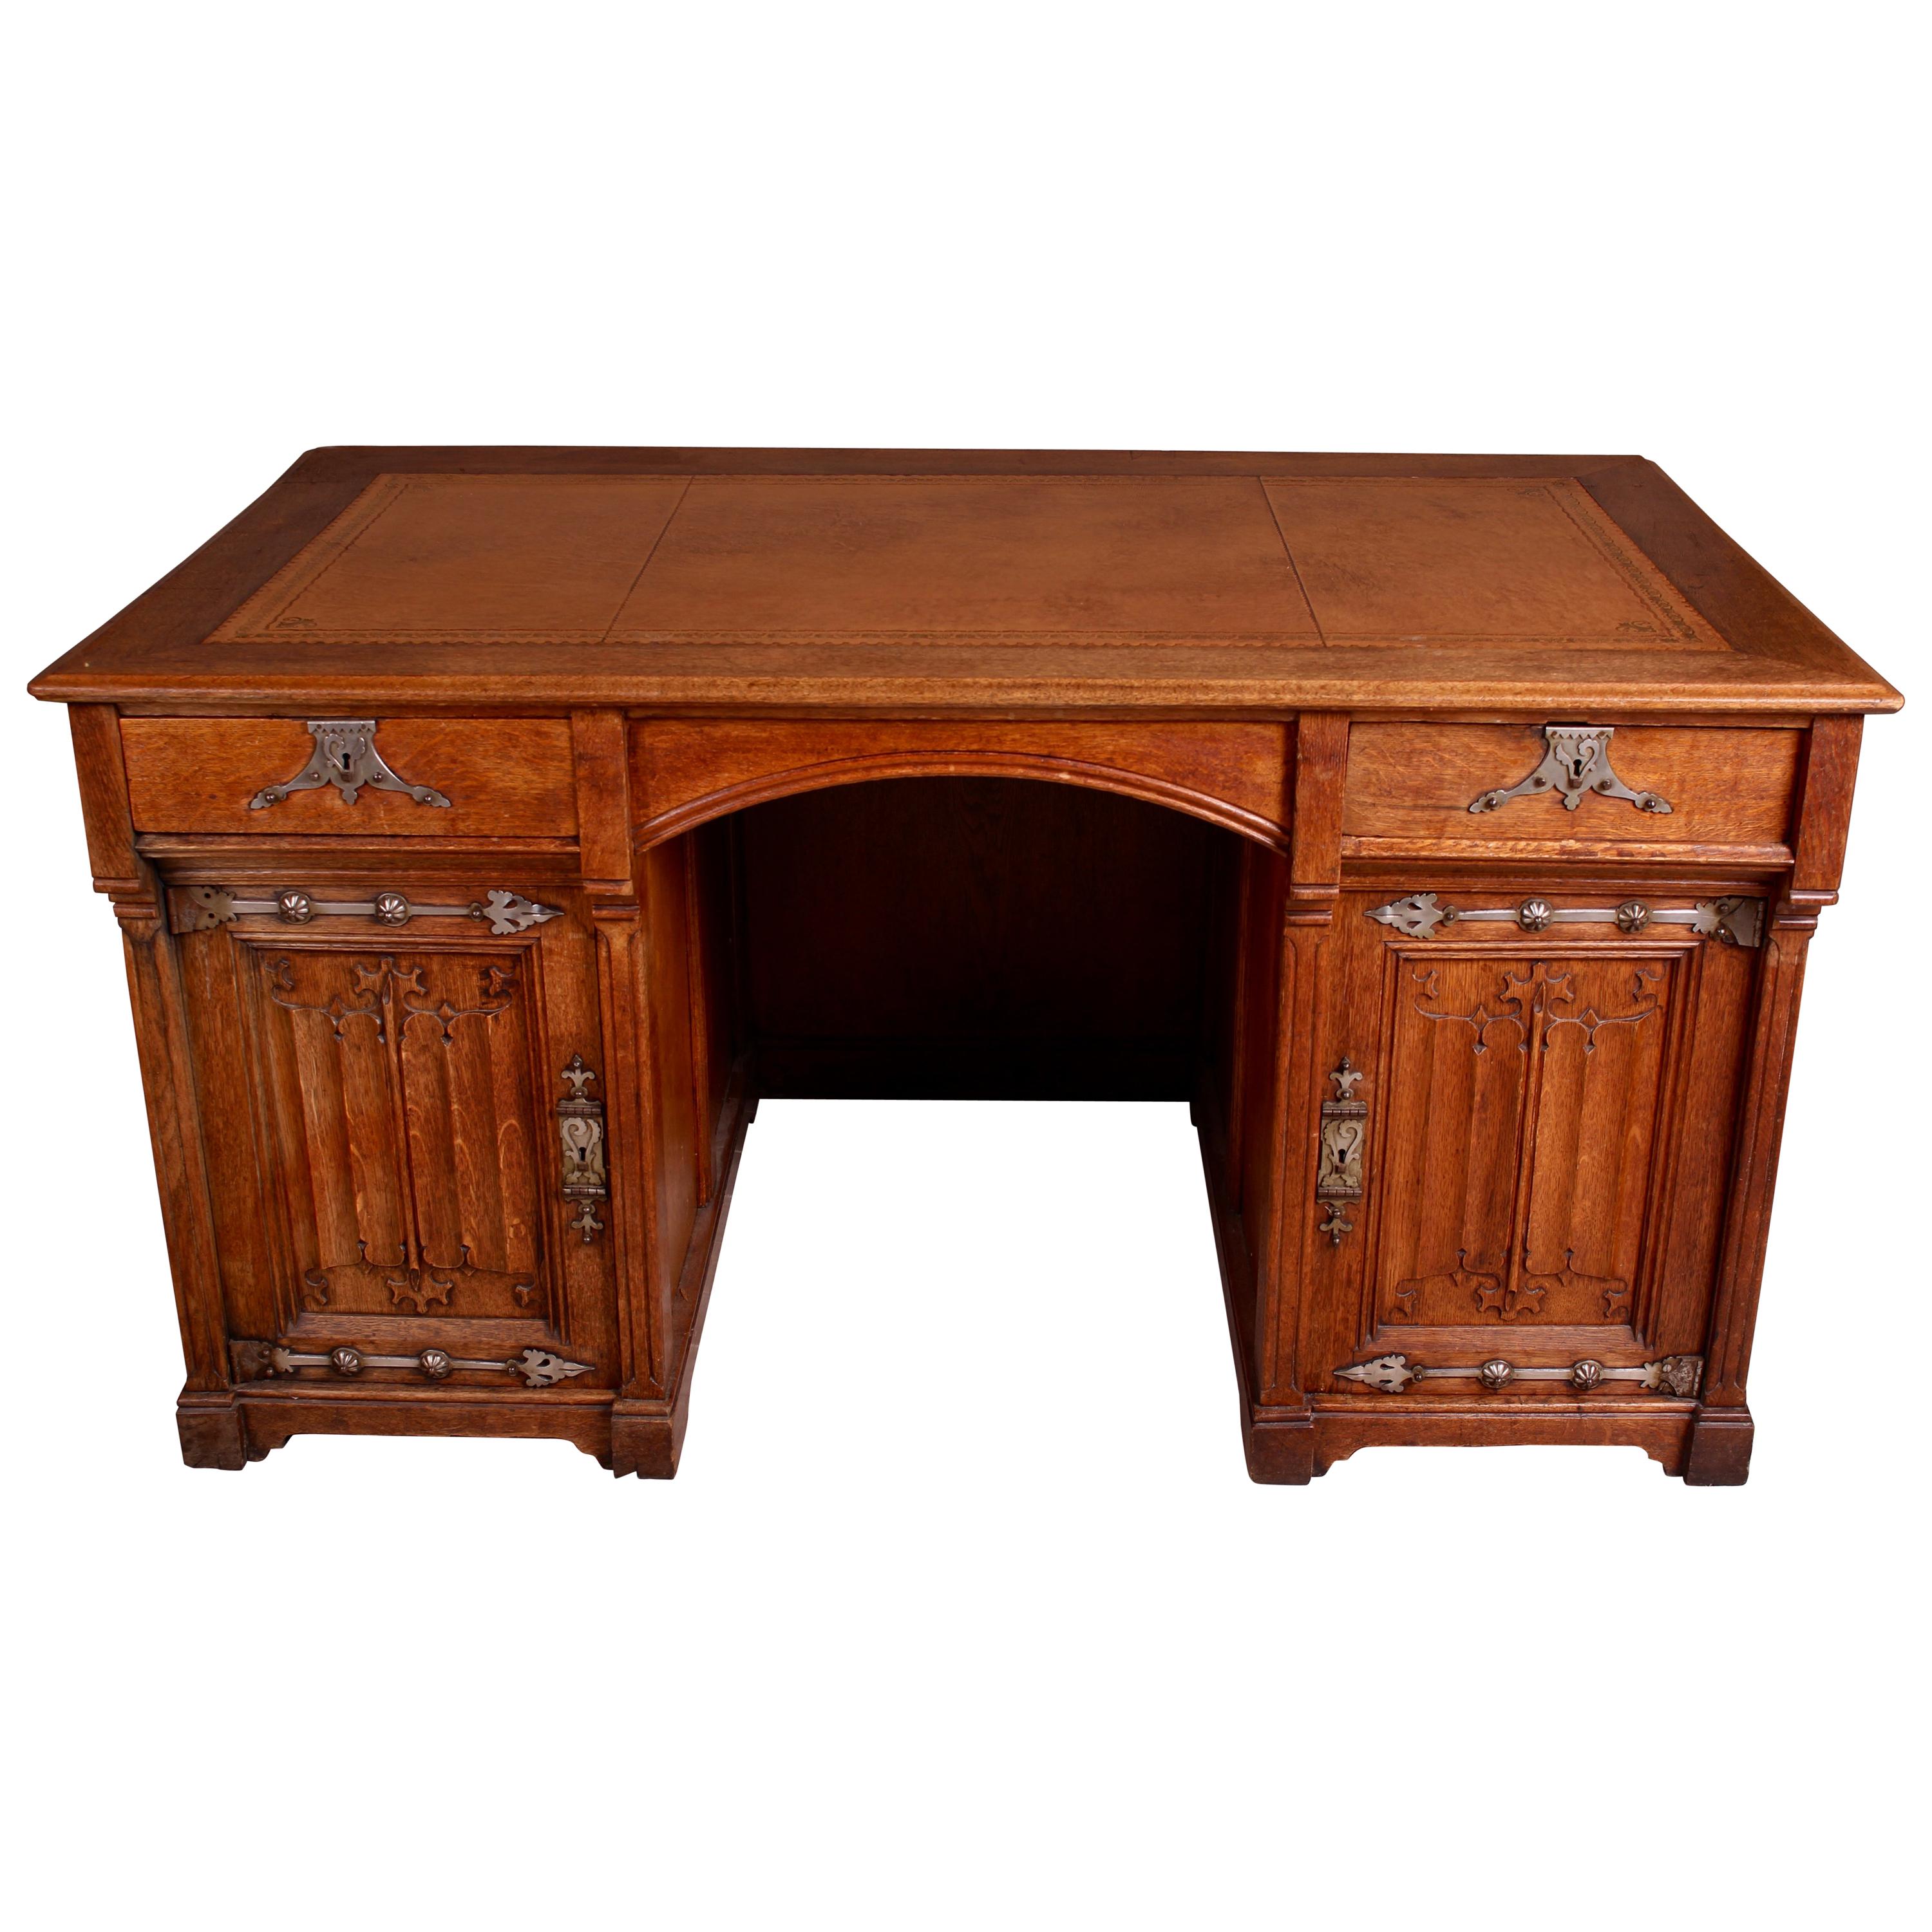 Victorian Gothic Revival Oak Desk in the Manner of Pugin